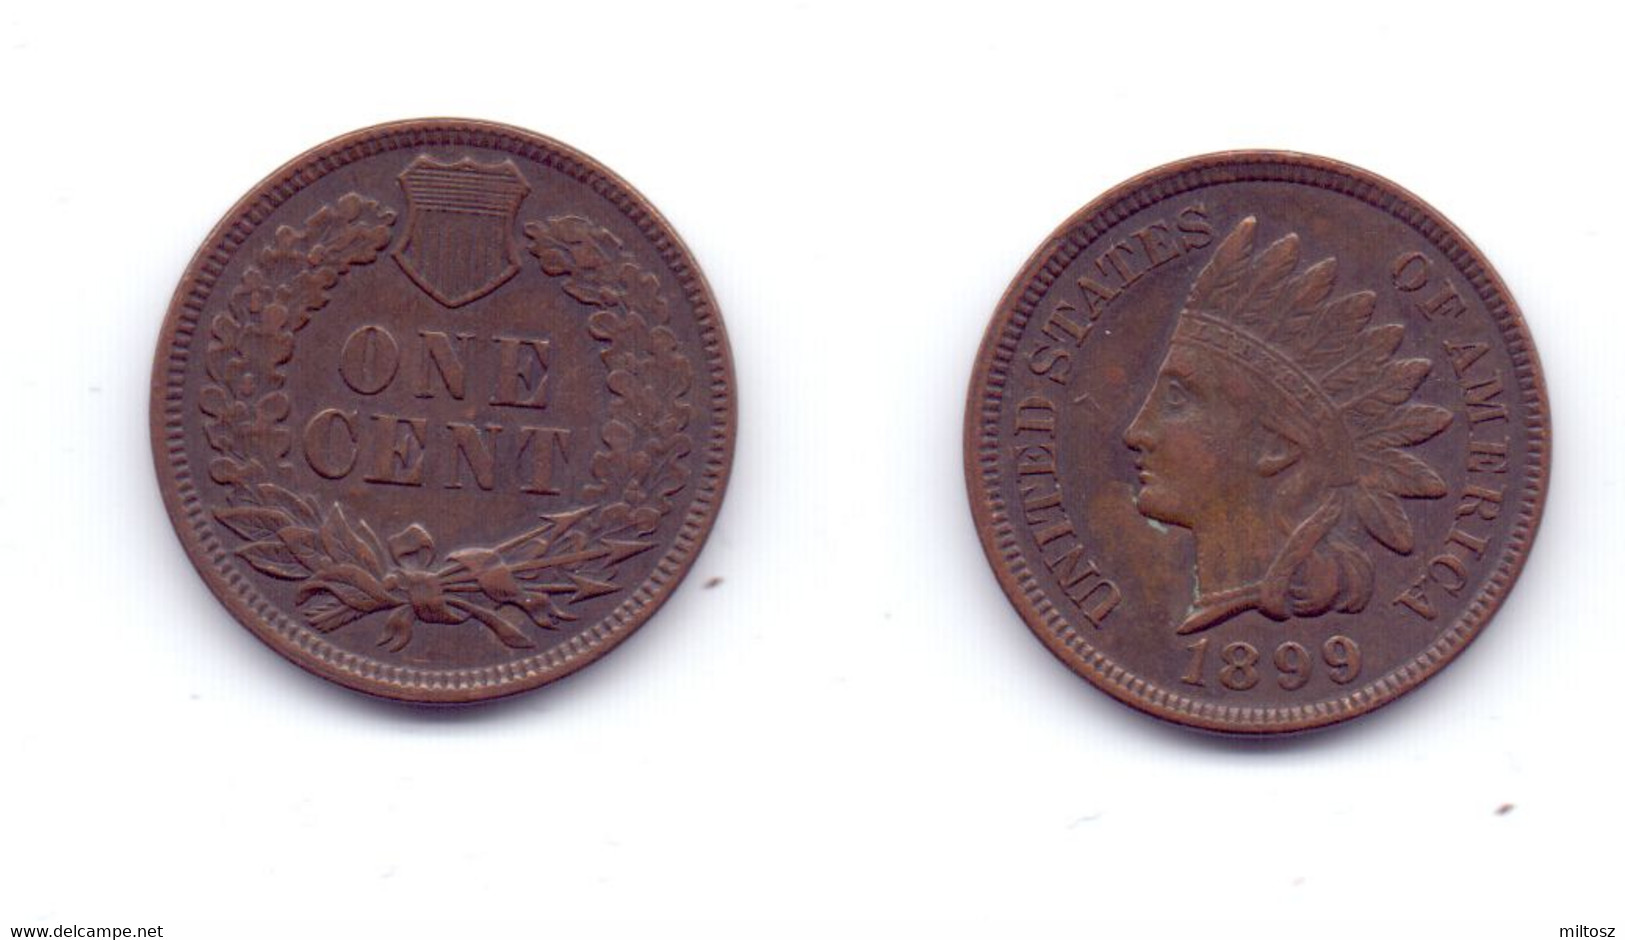 U.S.A. 1 Cent 1899 - 1859-1909: Indian Head